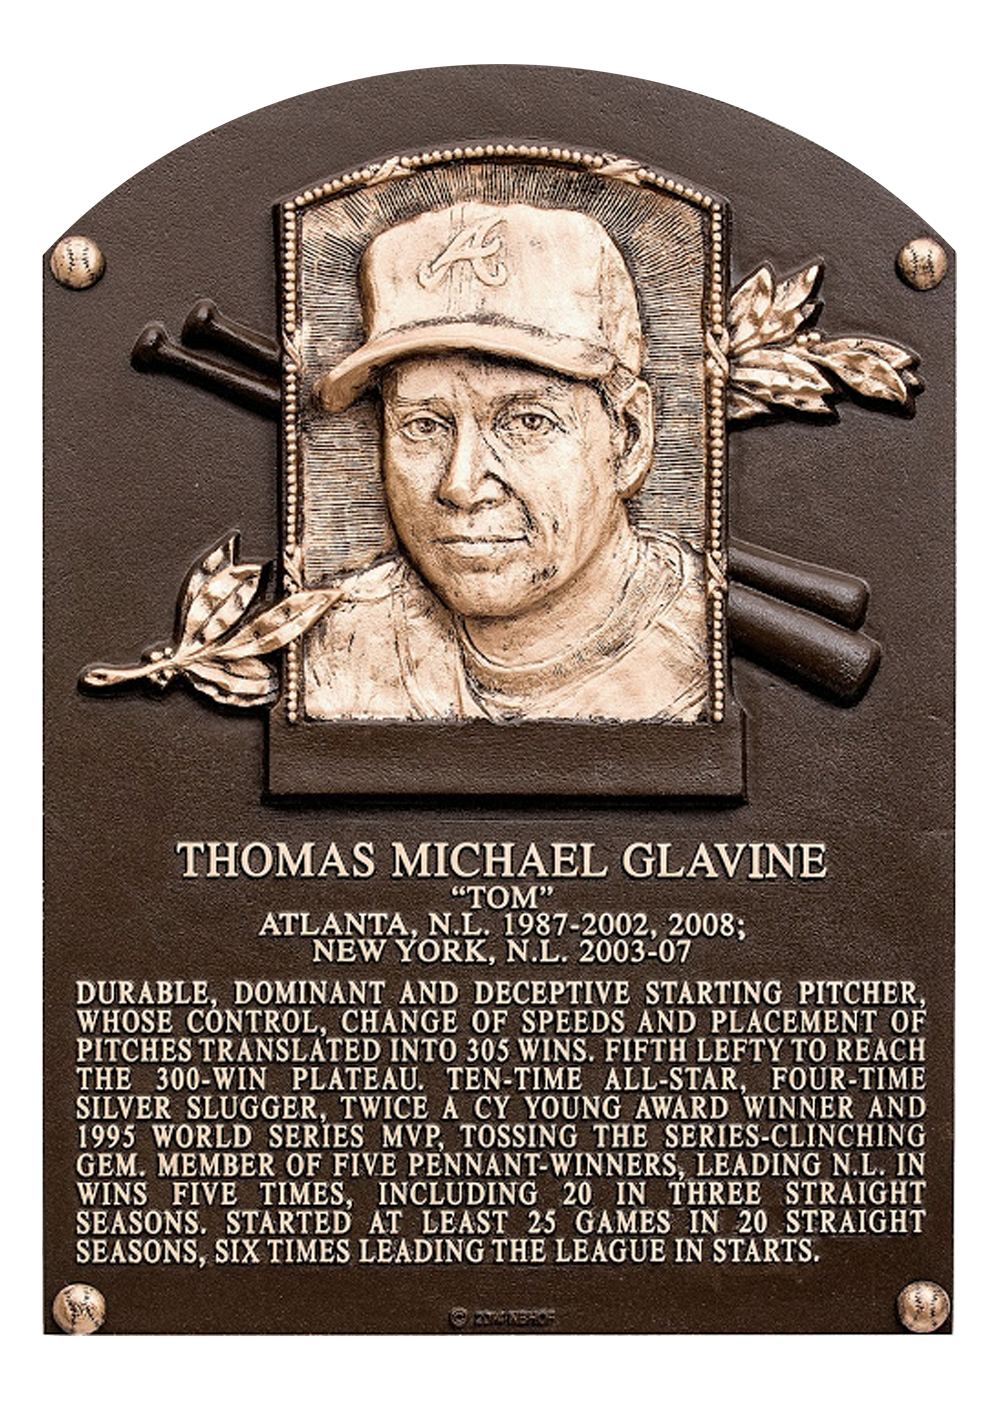 Tom Glavine Hall of Fame plaque